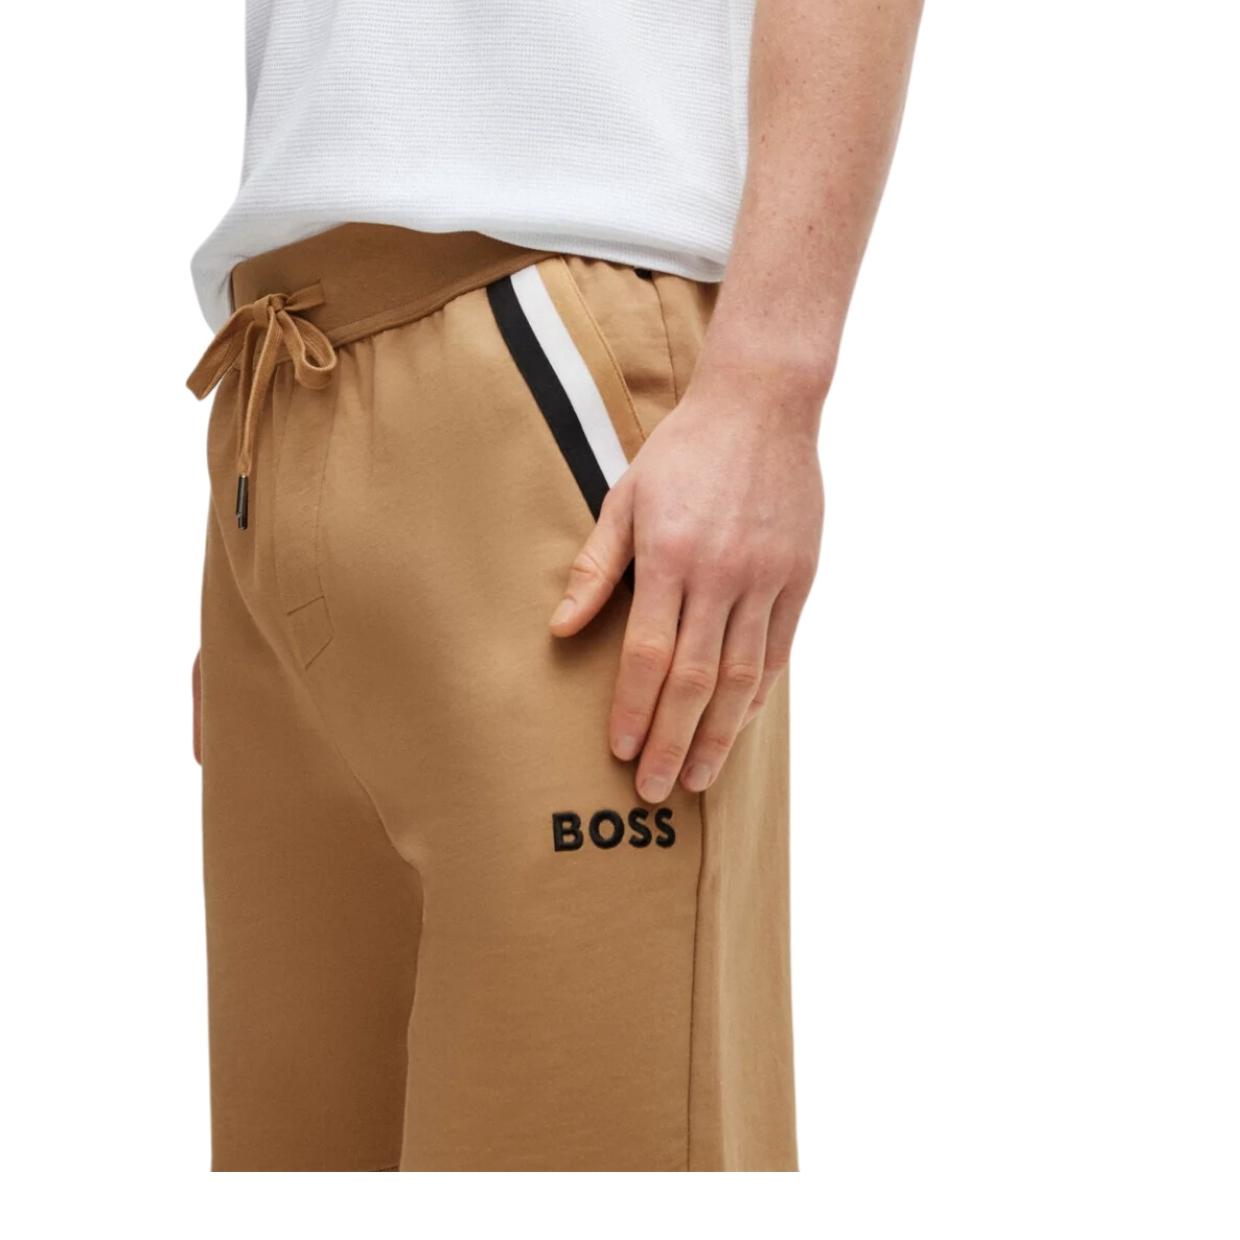 BOSS Signature Stripe Tape Beige Iconic Shorts